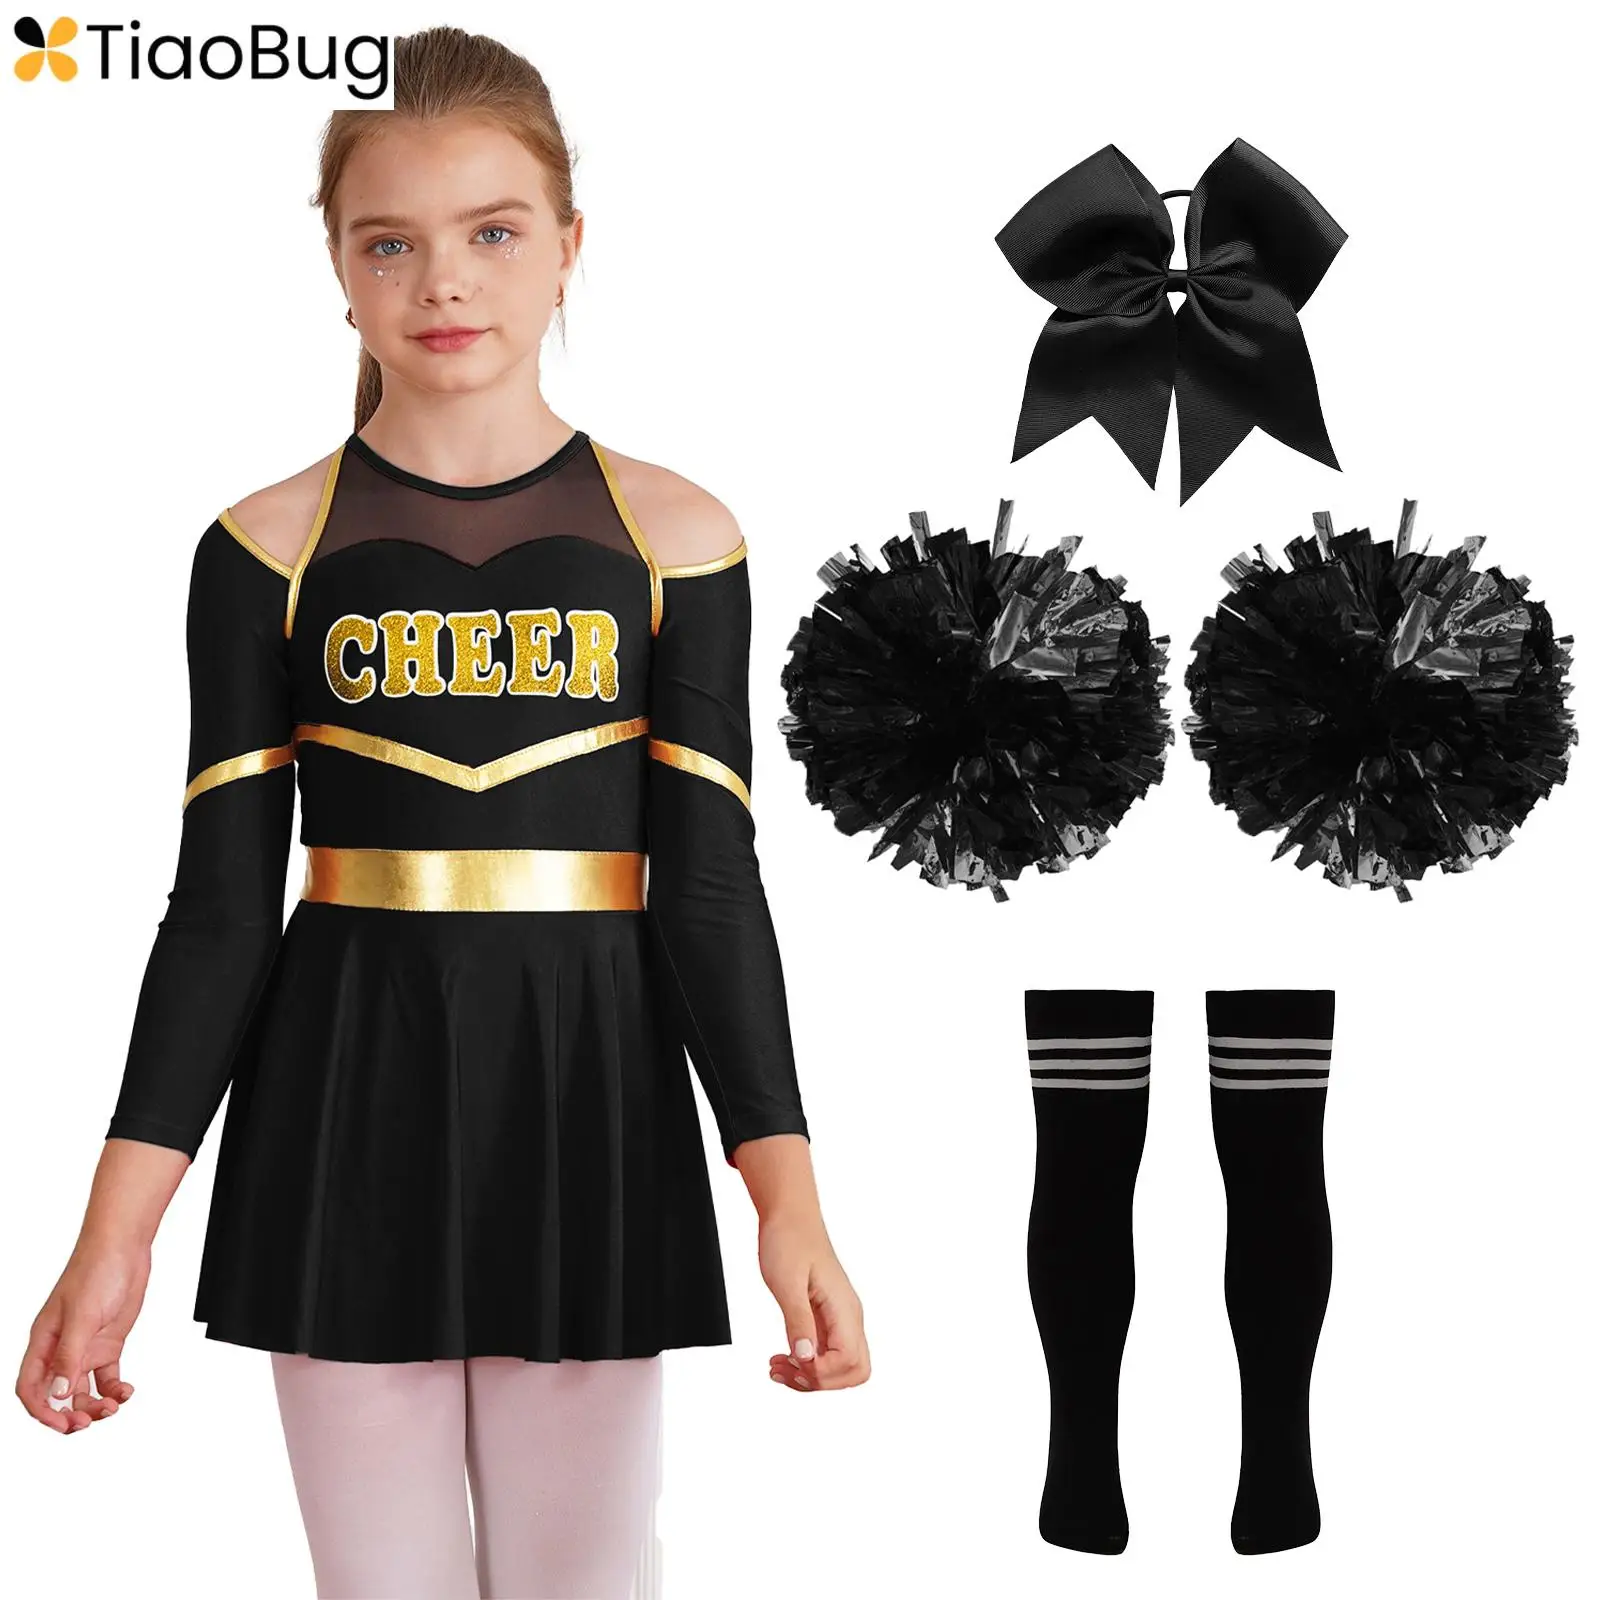 

Kids Girls Cheerleader Costume Halloween Cheerleading Uniform Long Sleeve Gymnastic Dance Dress with Pom Poms Stocking Hair Tie